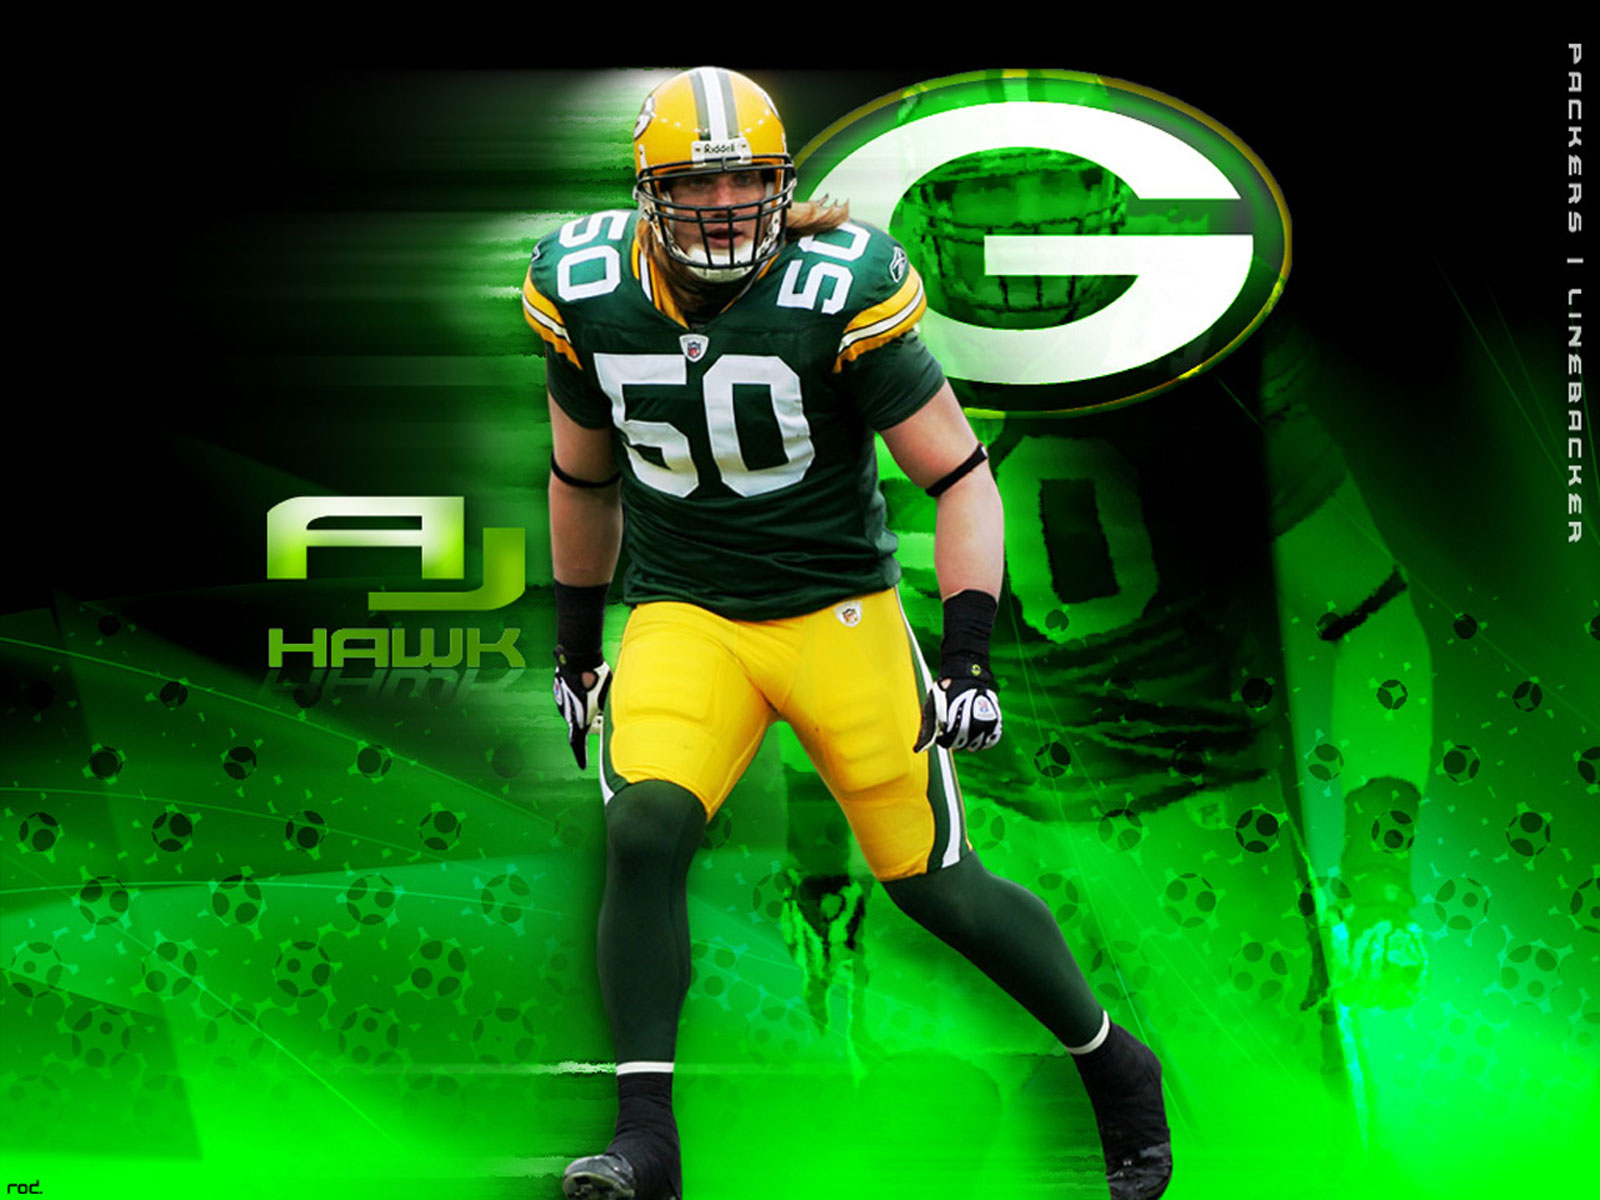 NFL Wallpapers: AJ Hawk - Green Bay Packers